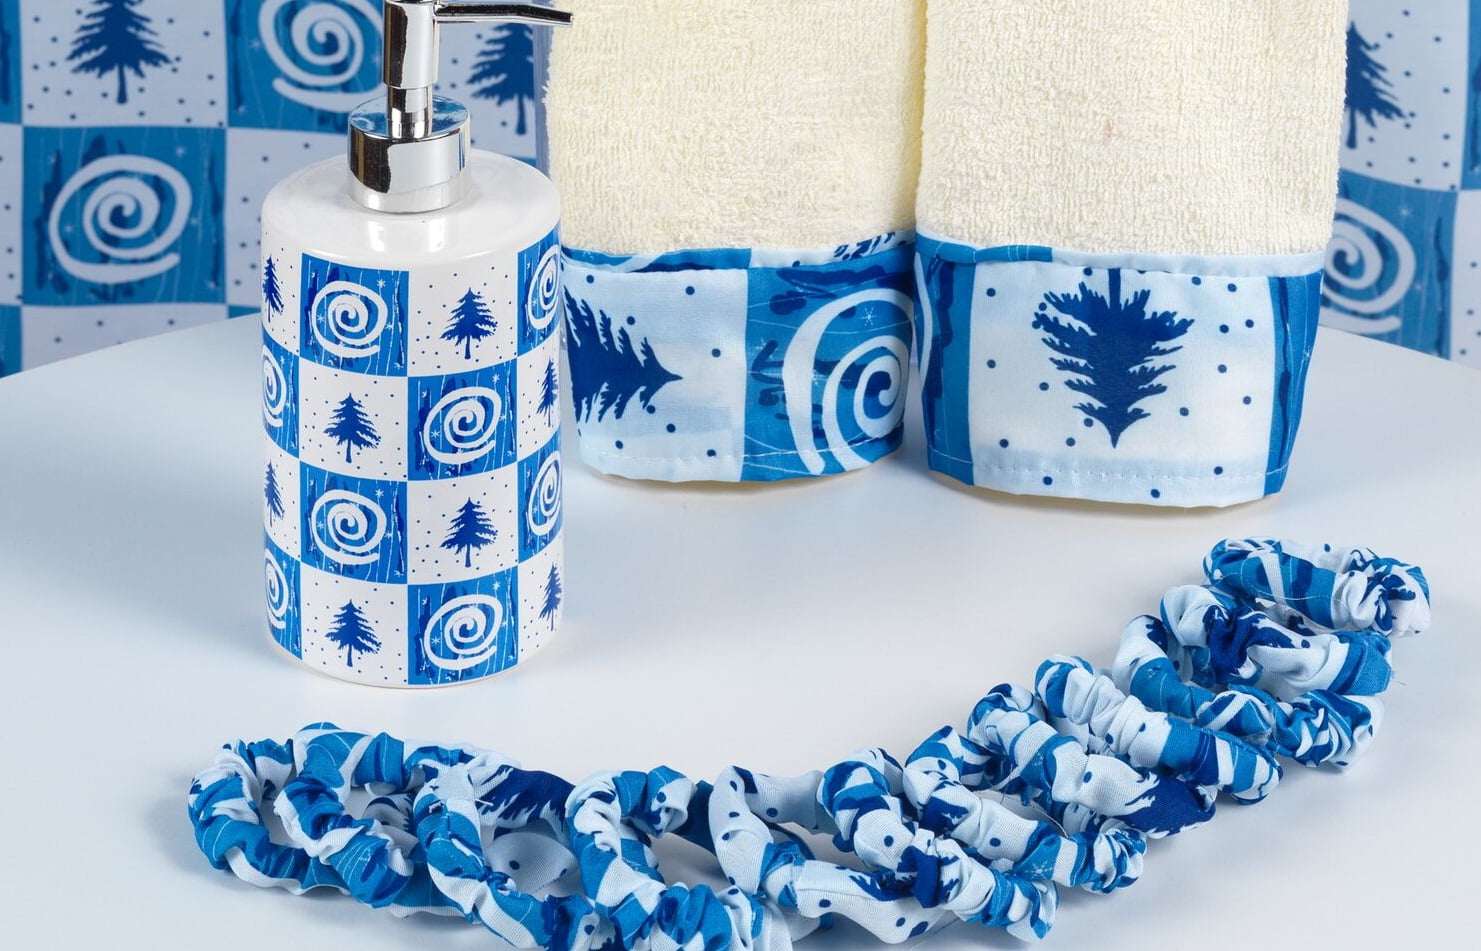 17-Pc Details about   Idea Nuova BLUE/WHITE Holiday Snowflake Bath Set 